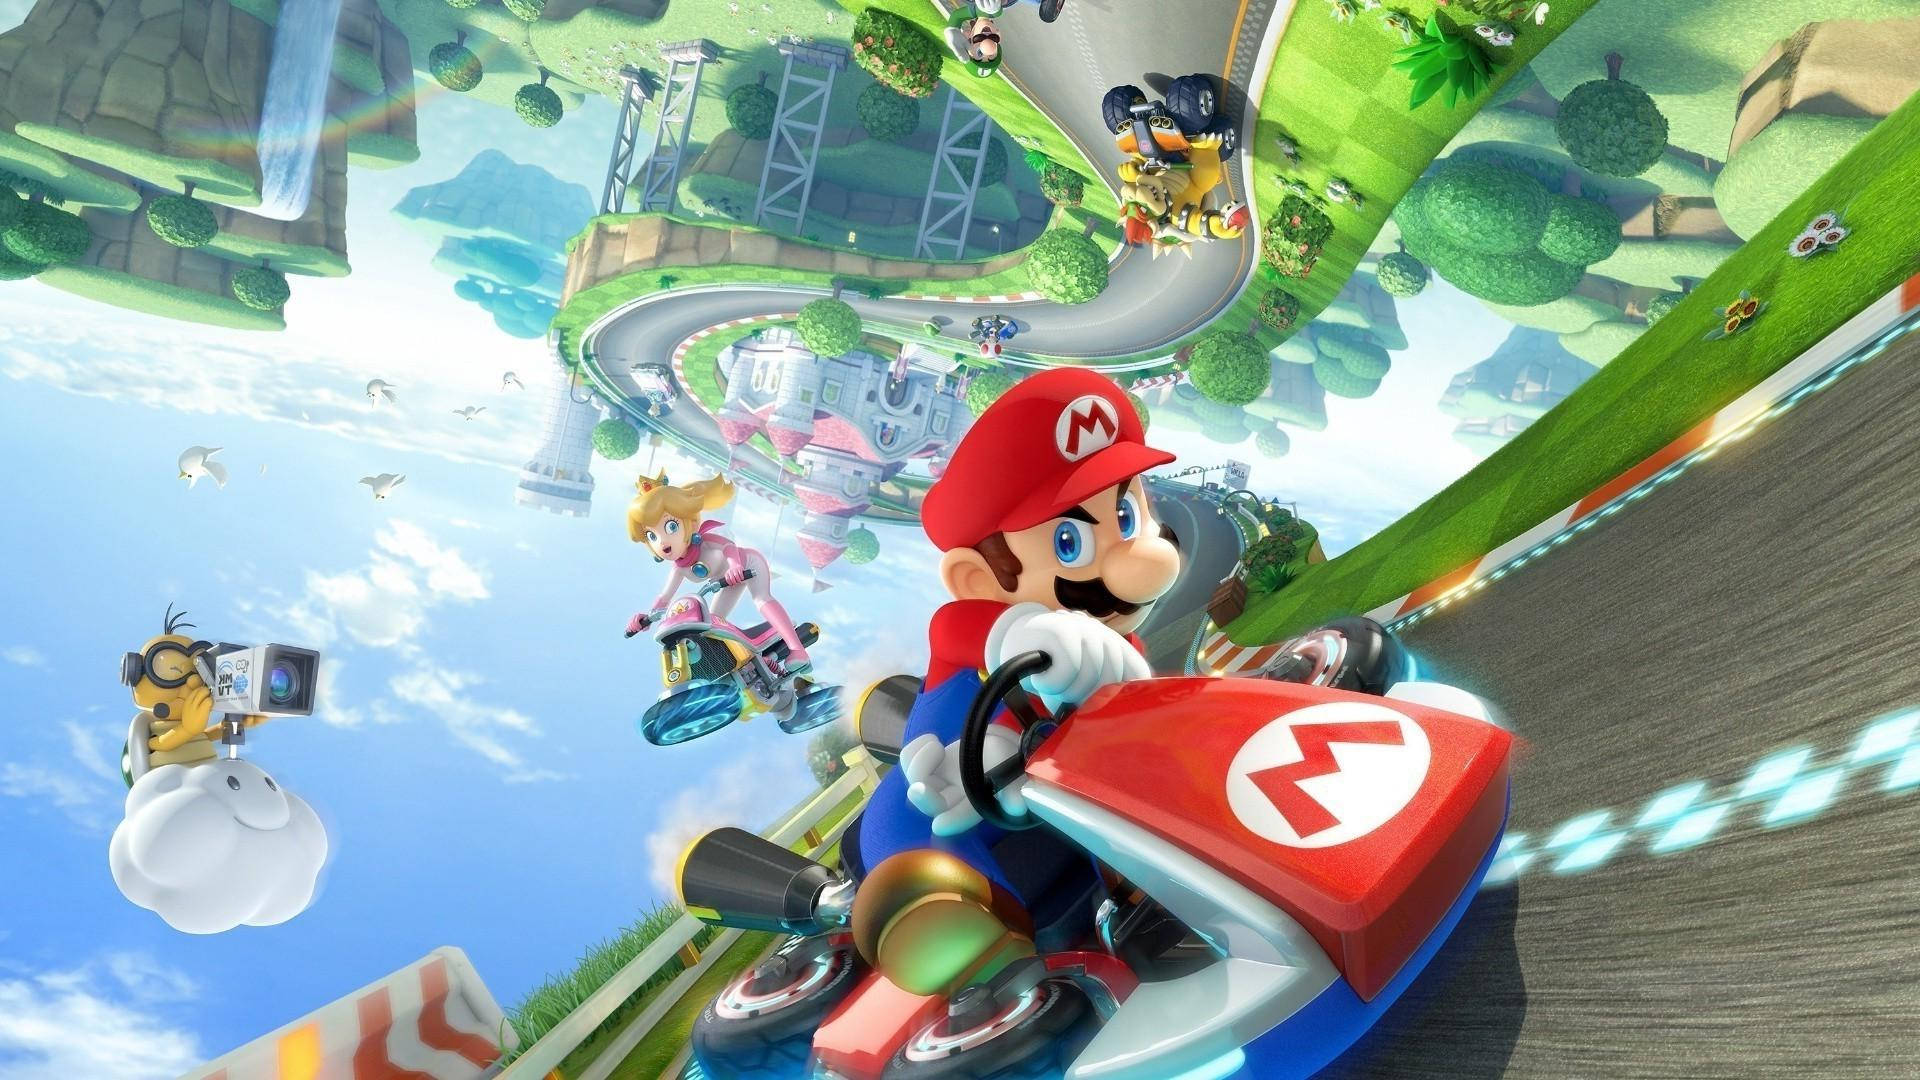 Wii Sports Super Mario Odyssey Wallpaper